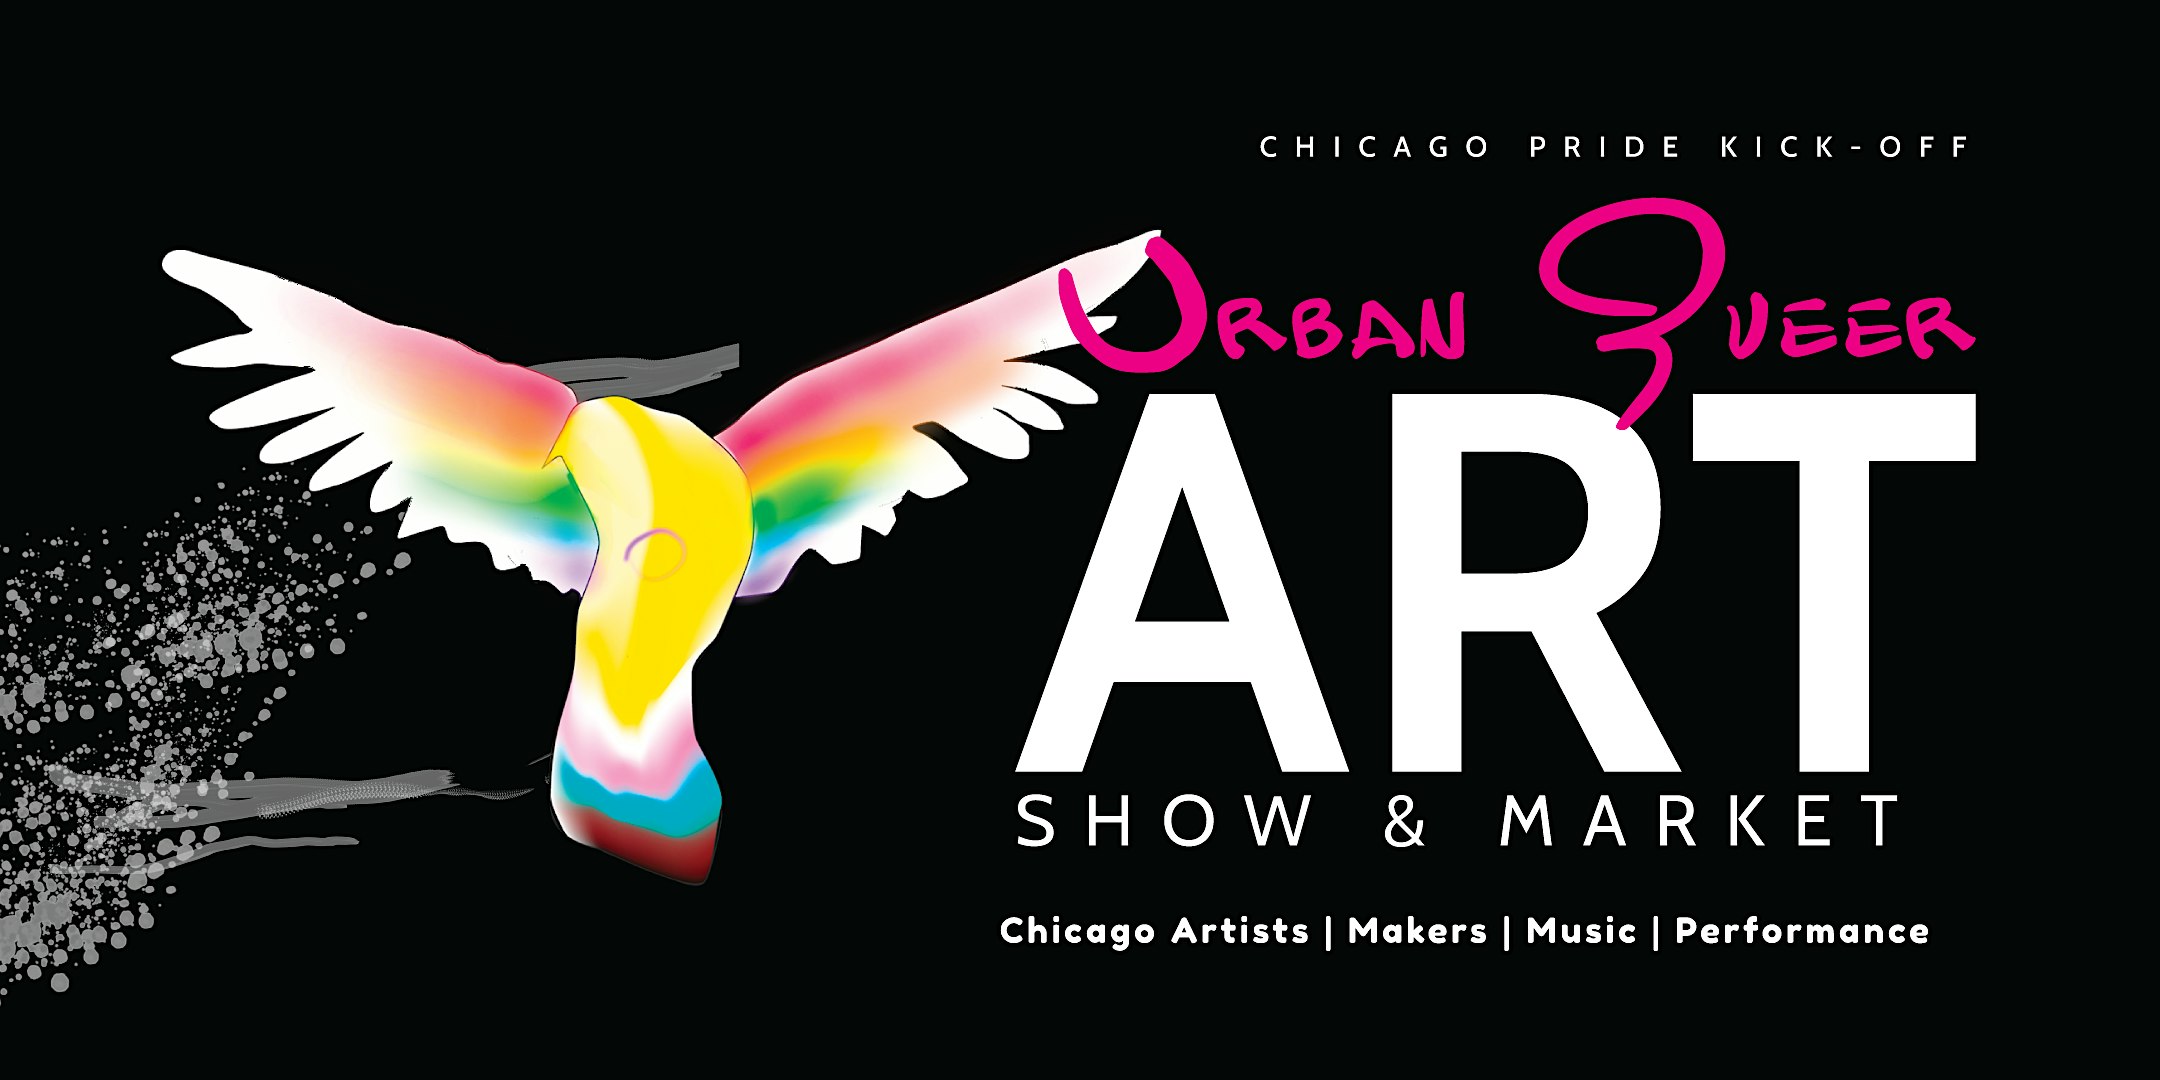 Chicago Pride Kick-Off Urban Queer Art Show & Market